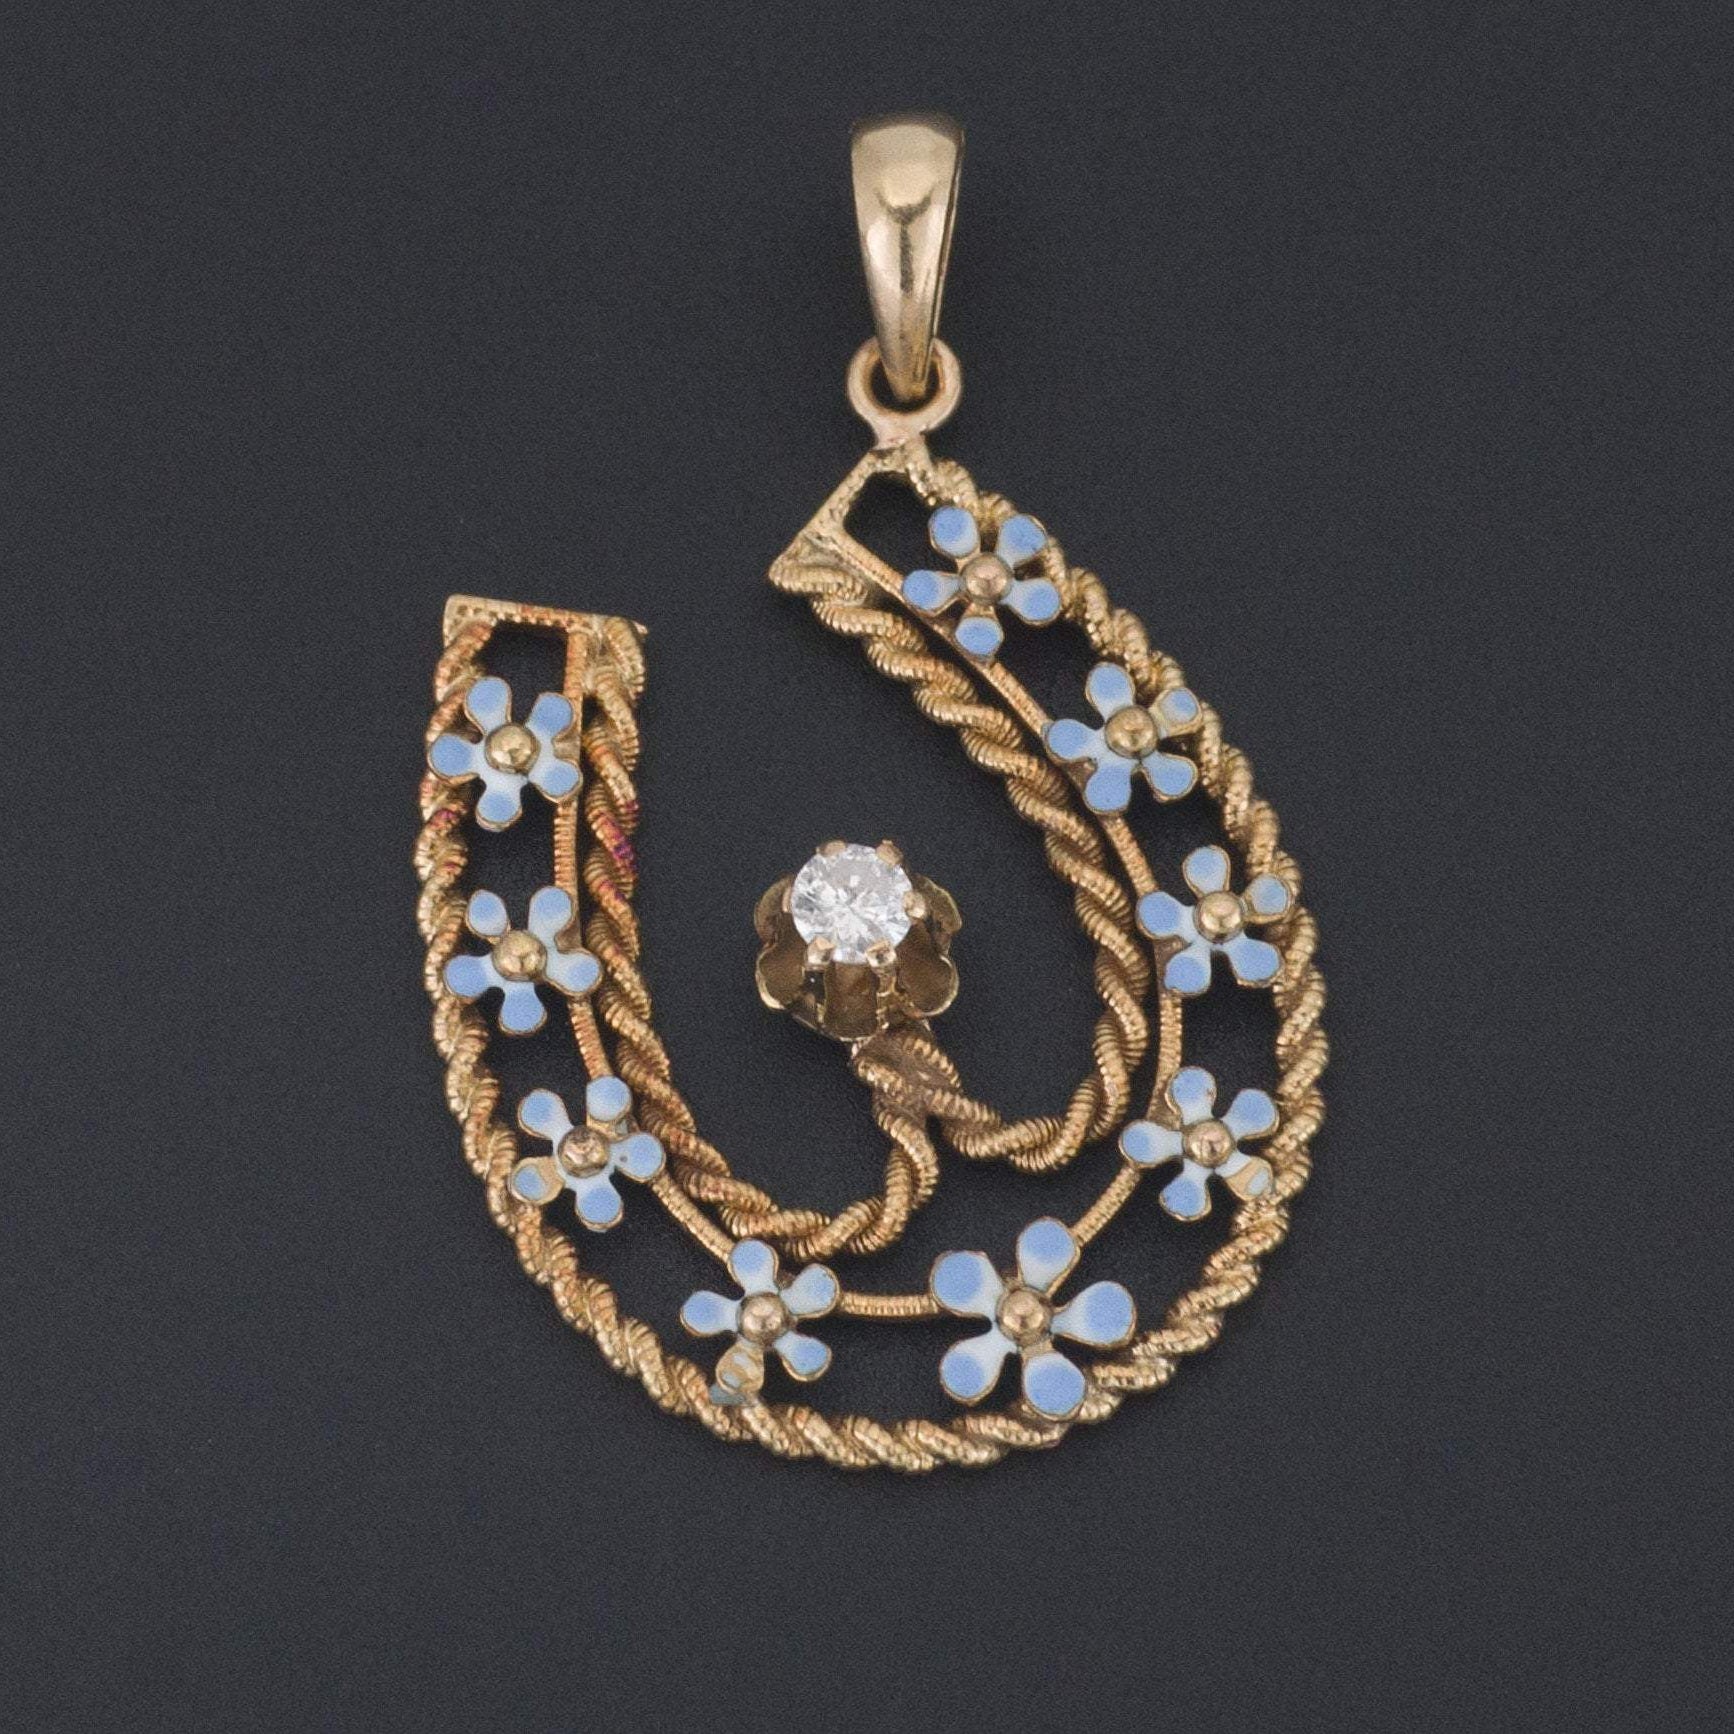 Horseshoe Pendant | 14k Gold Diamond & Enamel Horseshoe | Antique Horseshoe Pendant